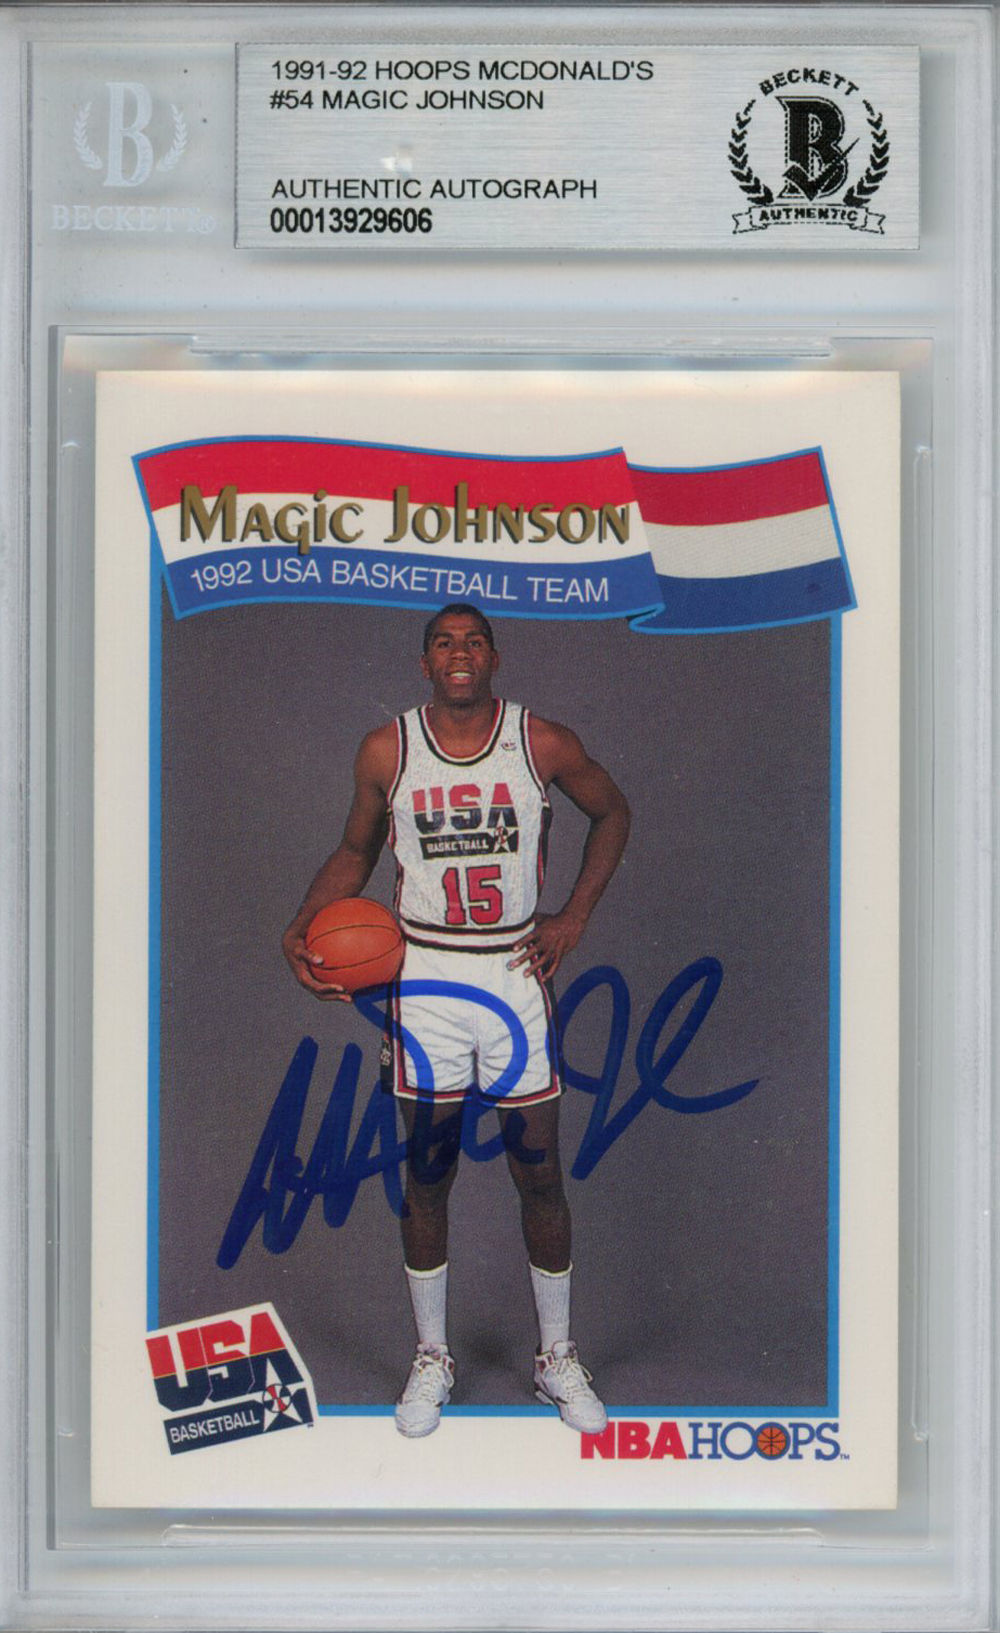 Magic Johnson Signed 1991-92 Hoops Mcdonalds #54 Trading Card BAS Slab